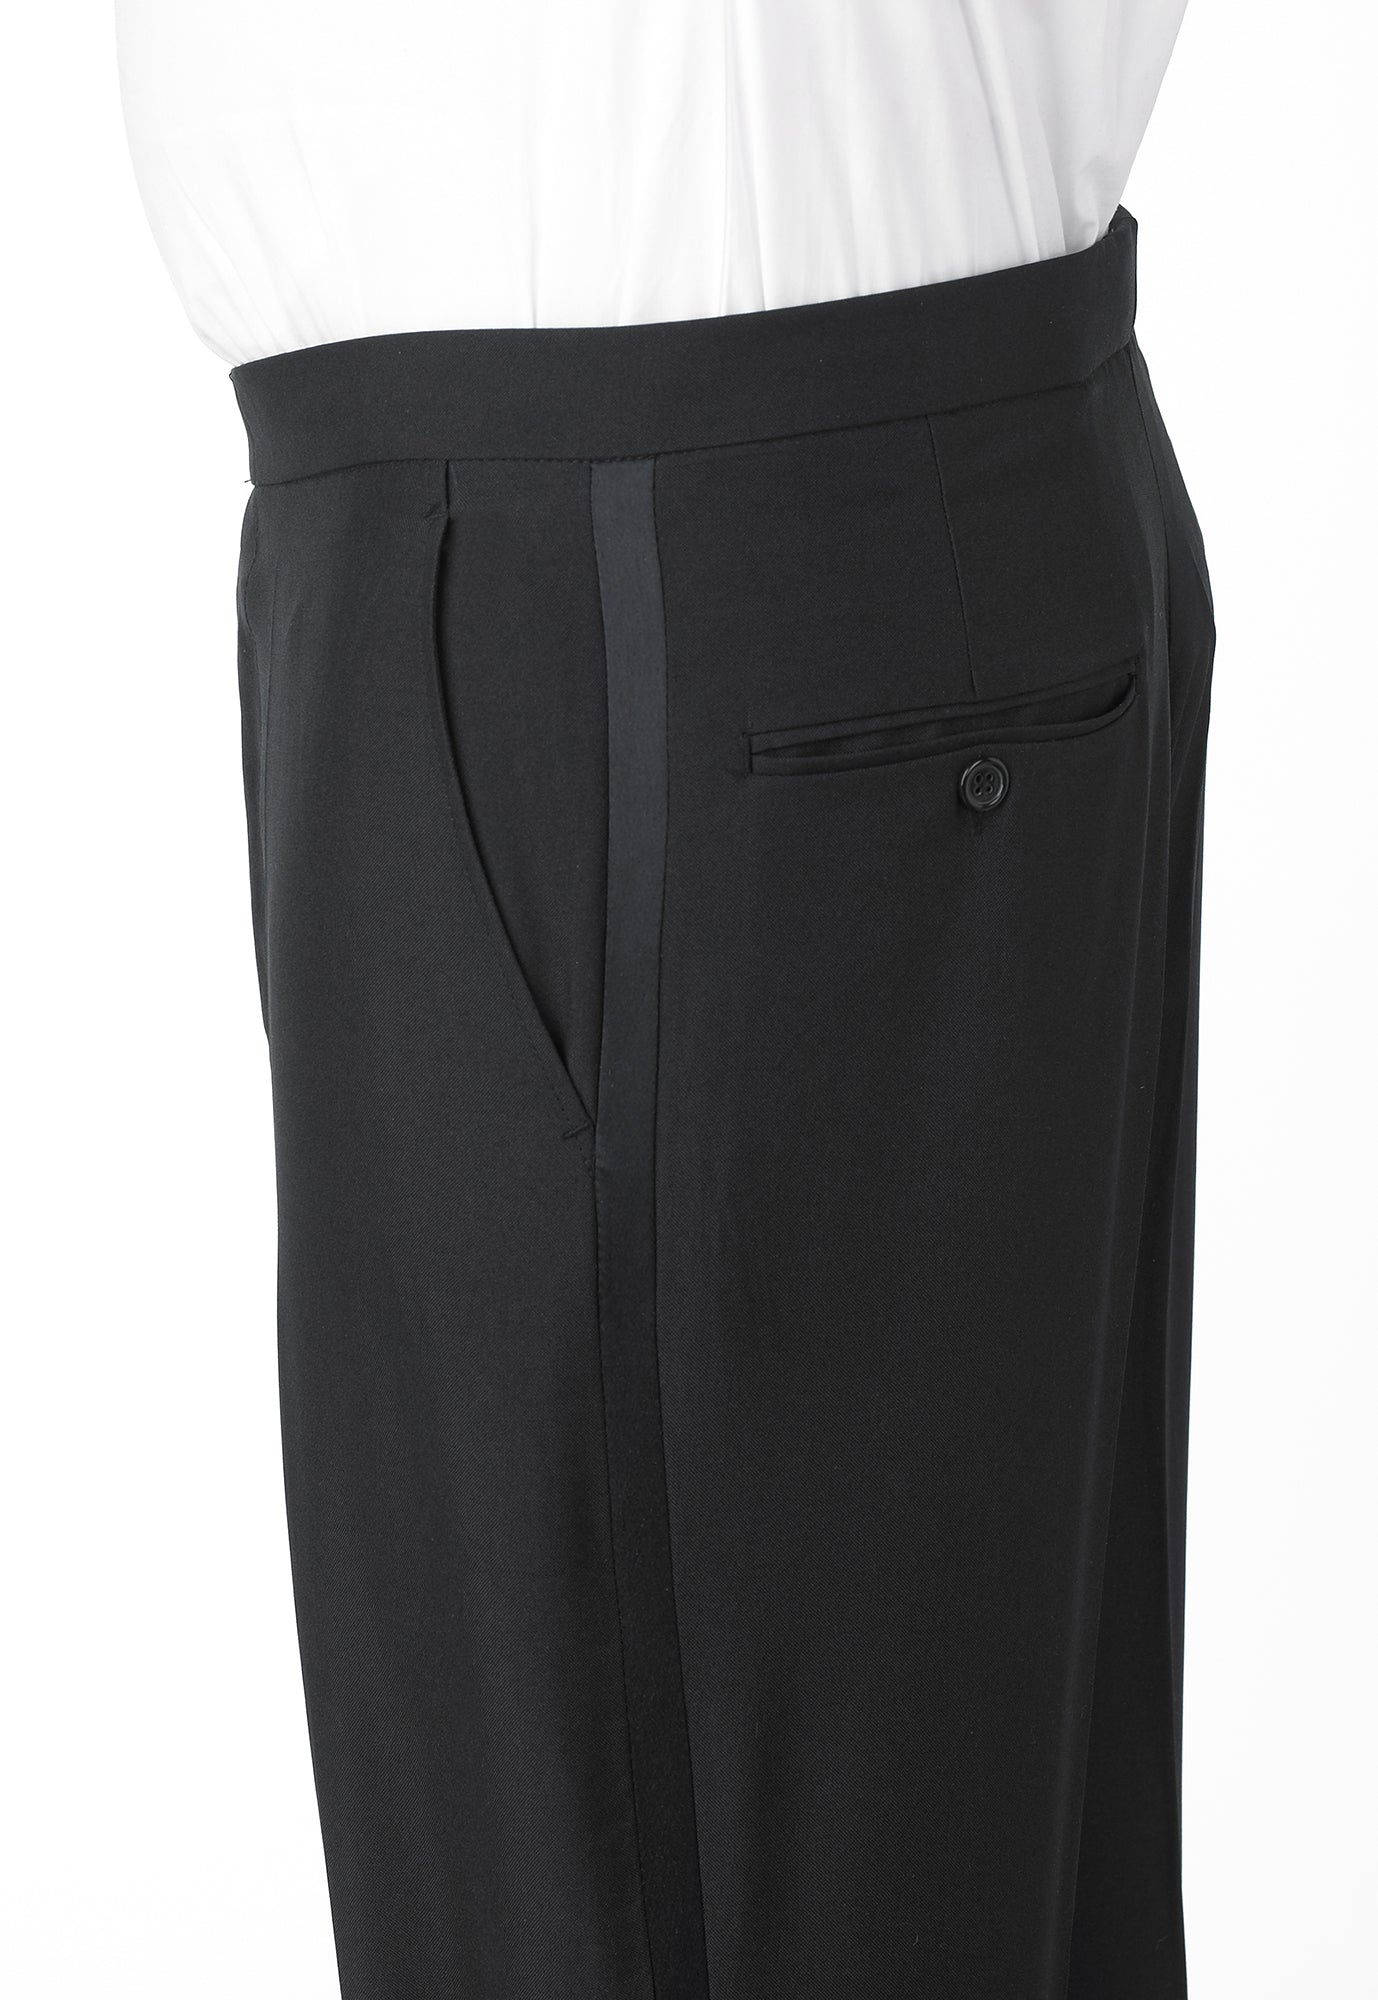 Paisley & Gray Slim Fit Suit Separates Tuxedo Pant | Men's Pants | Moores  Clothing